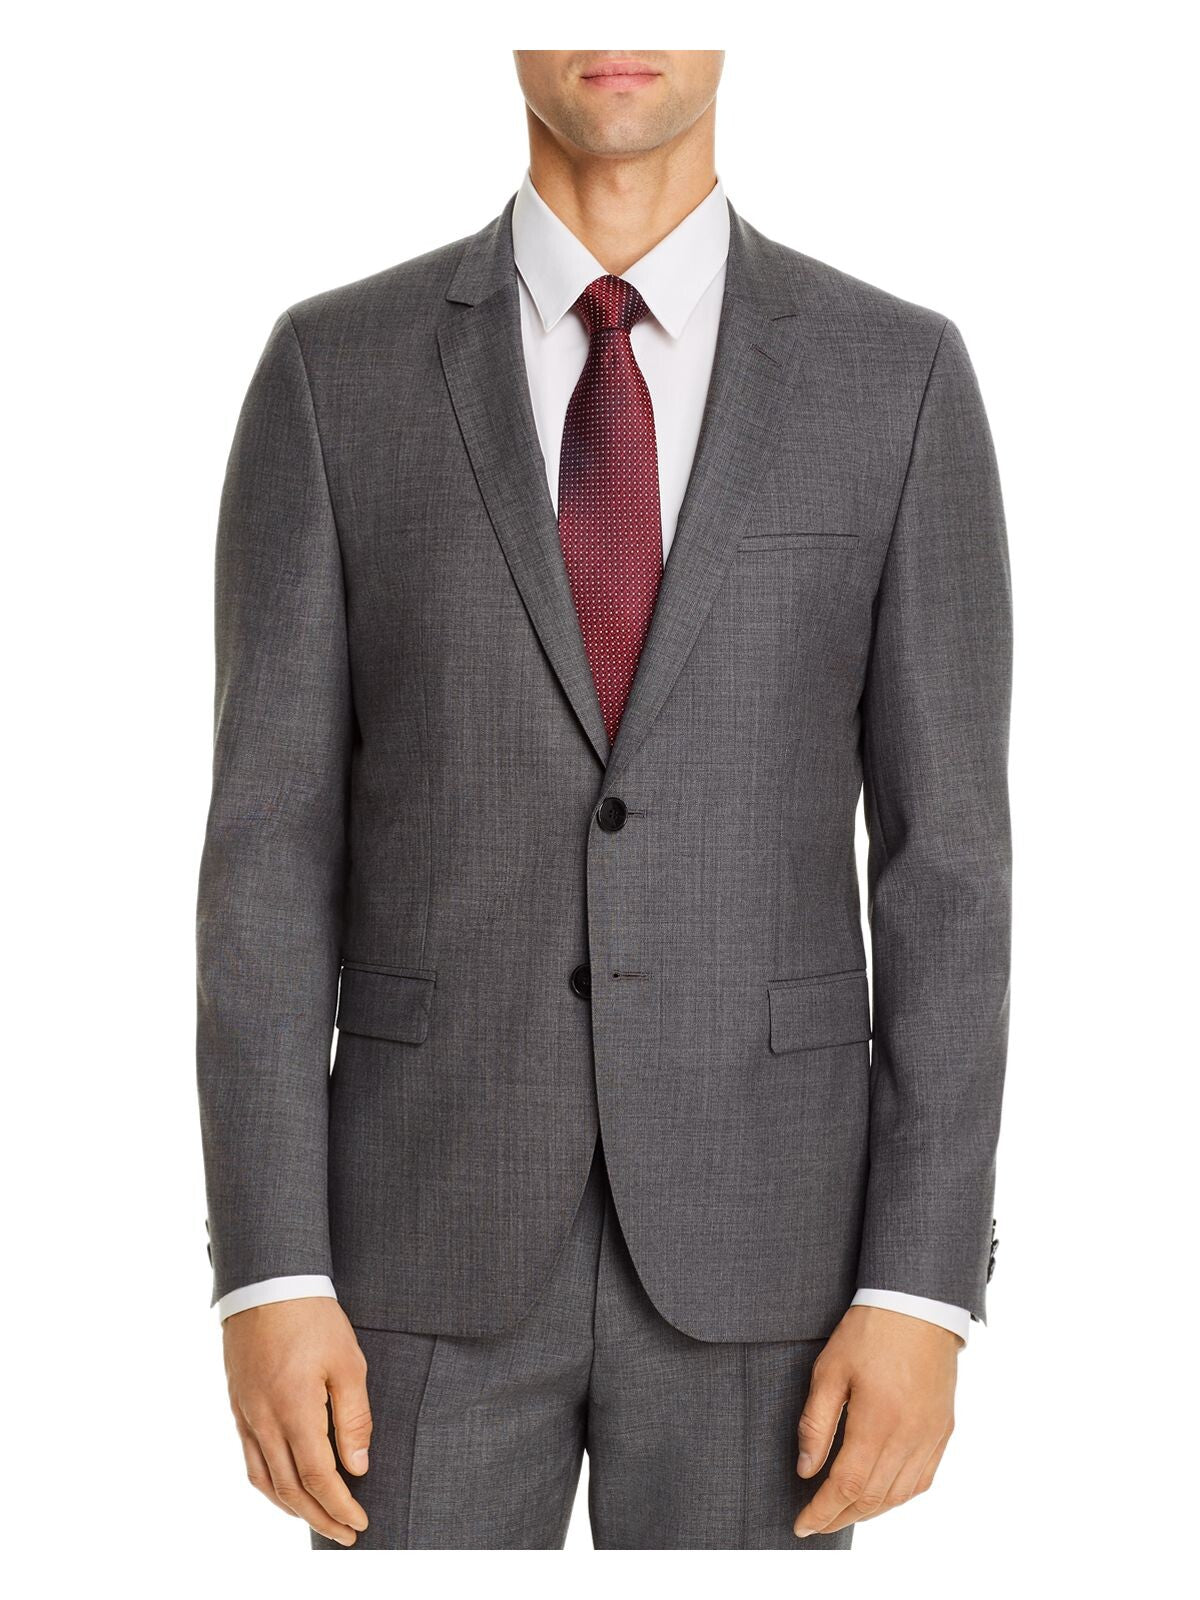 HUGO BOSS Mens Arti Sharkskin Gray Single Breasted, Extra Slim Fit Wool Blend Suit Separate Blazer Jacket 38R